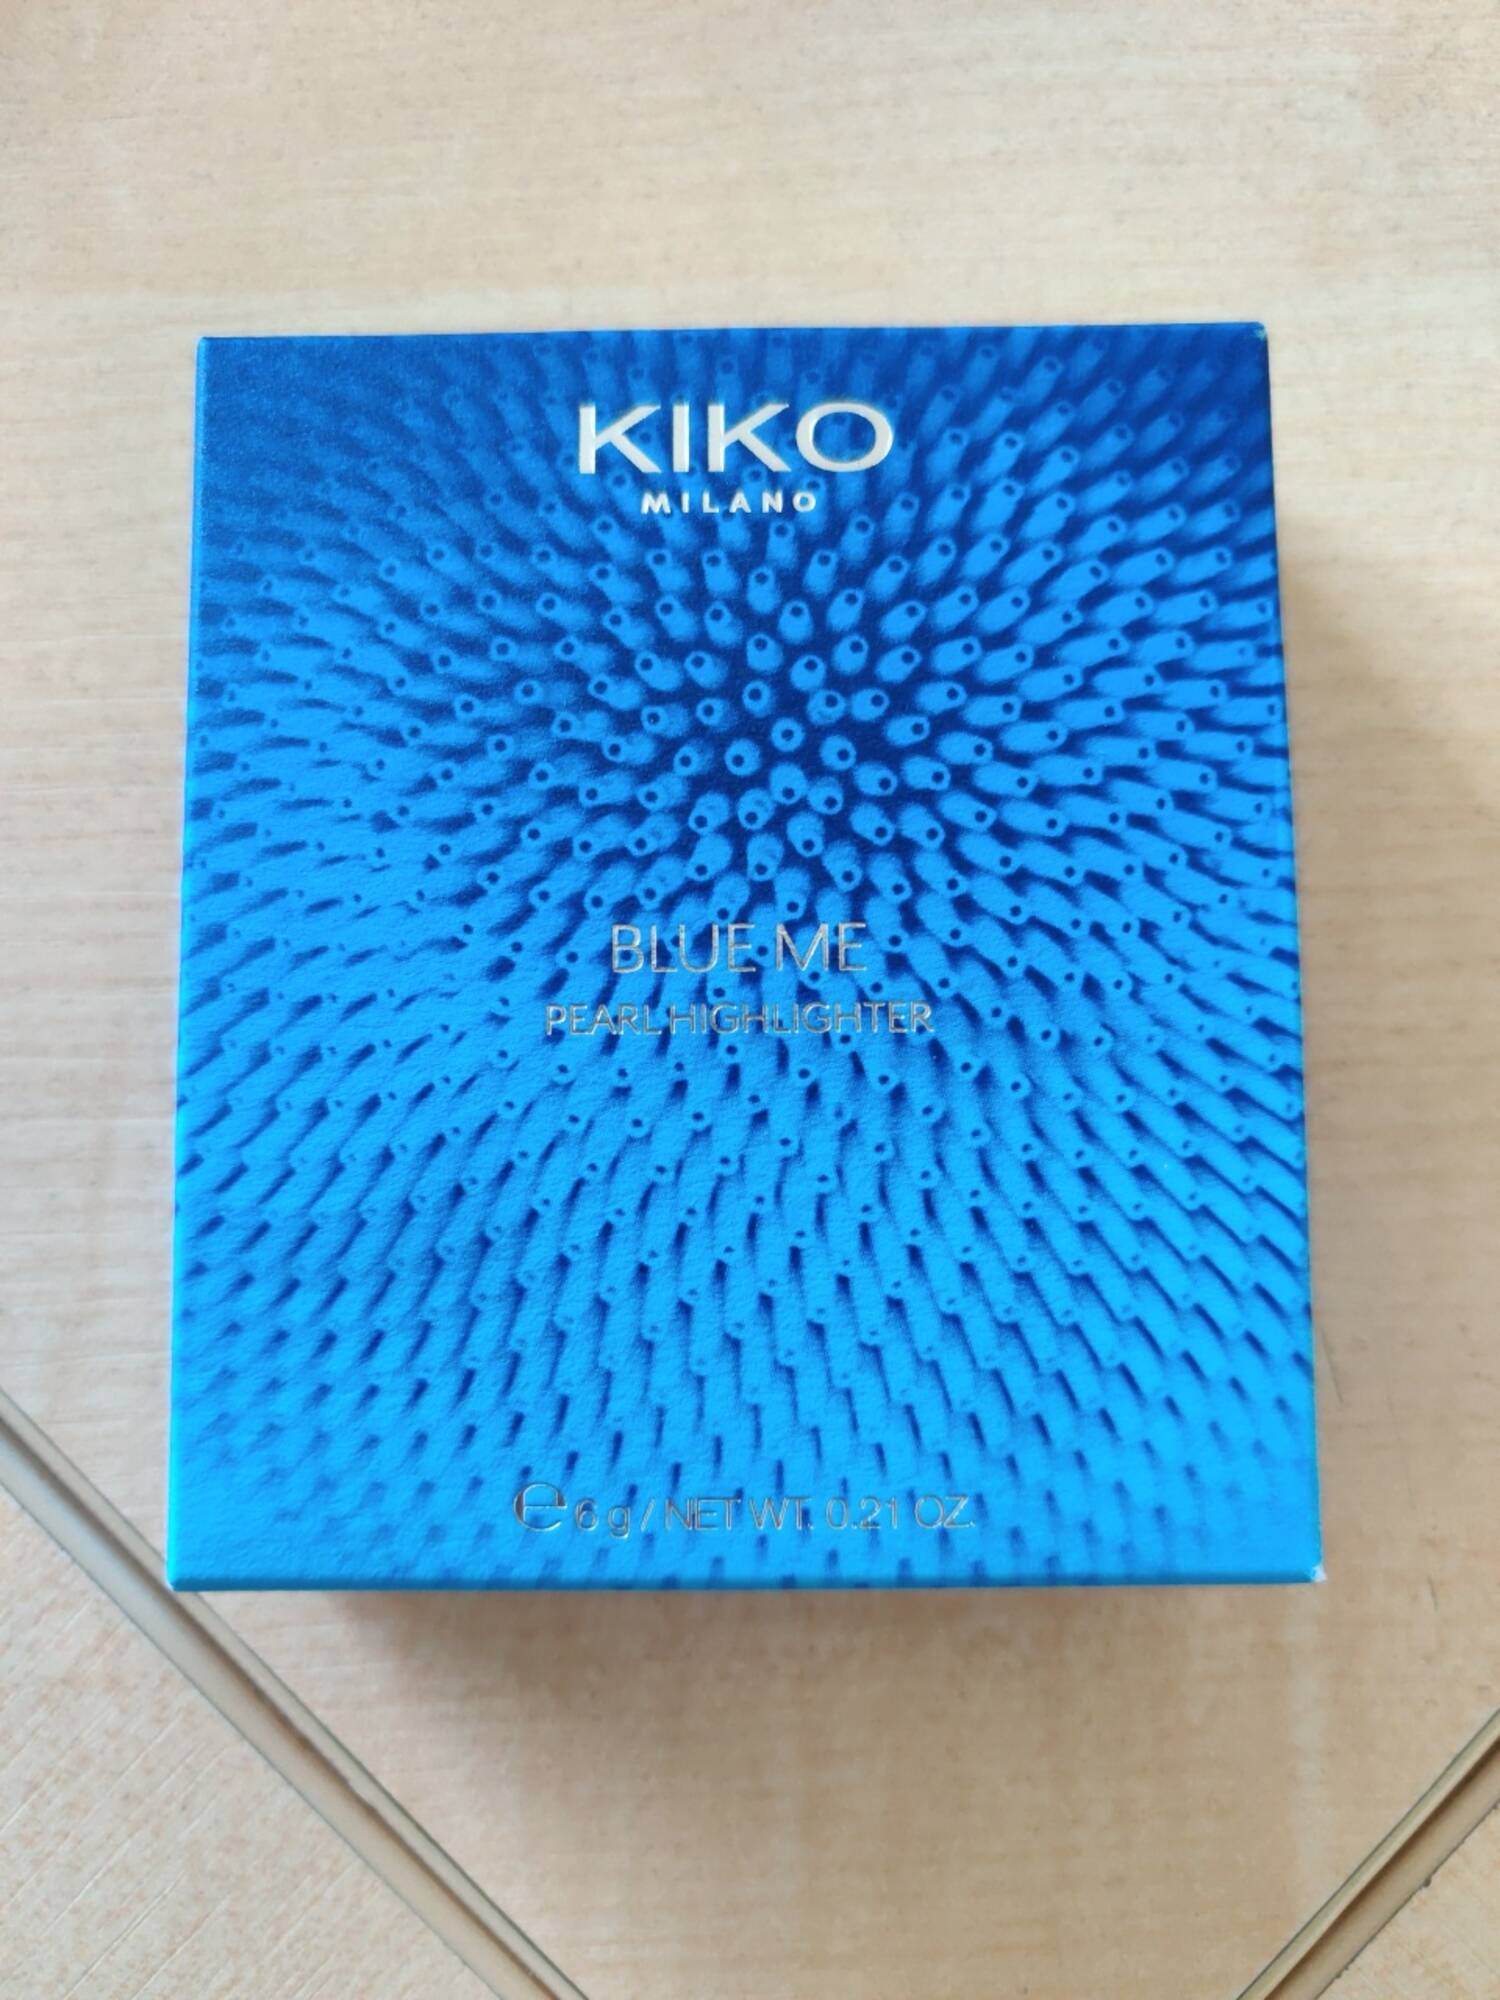 KIKO - Blue me - Pearl highlighter